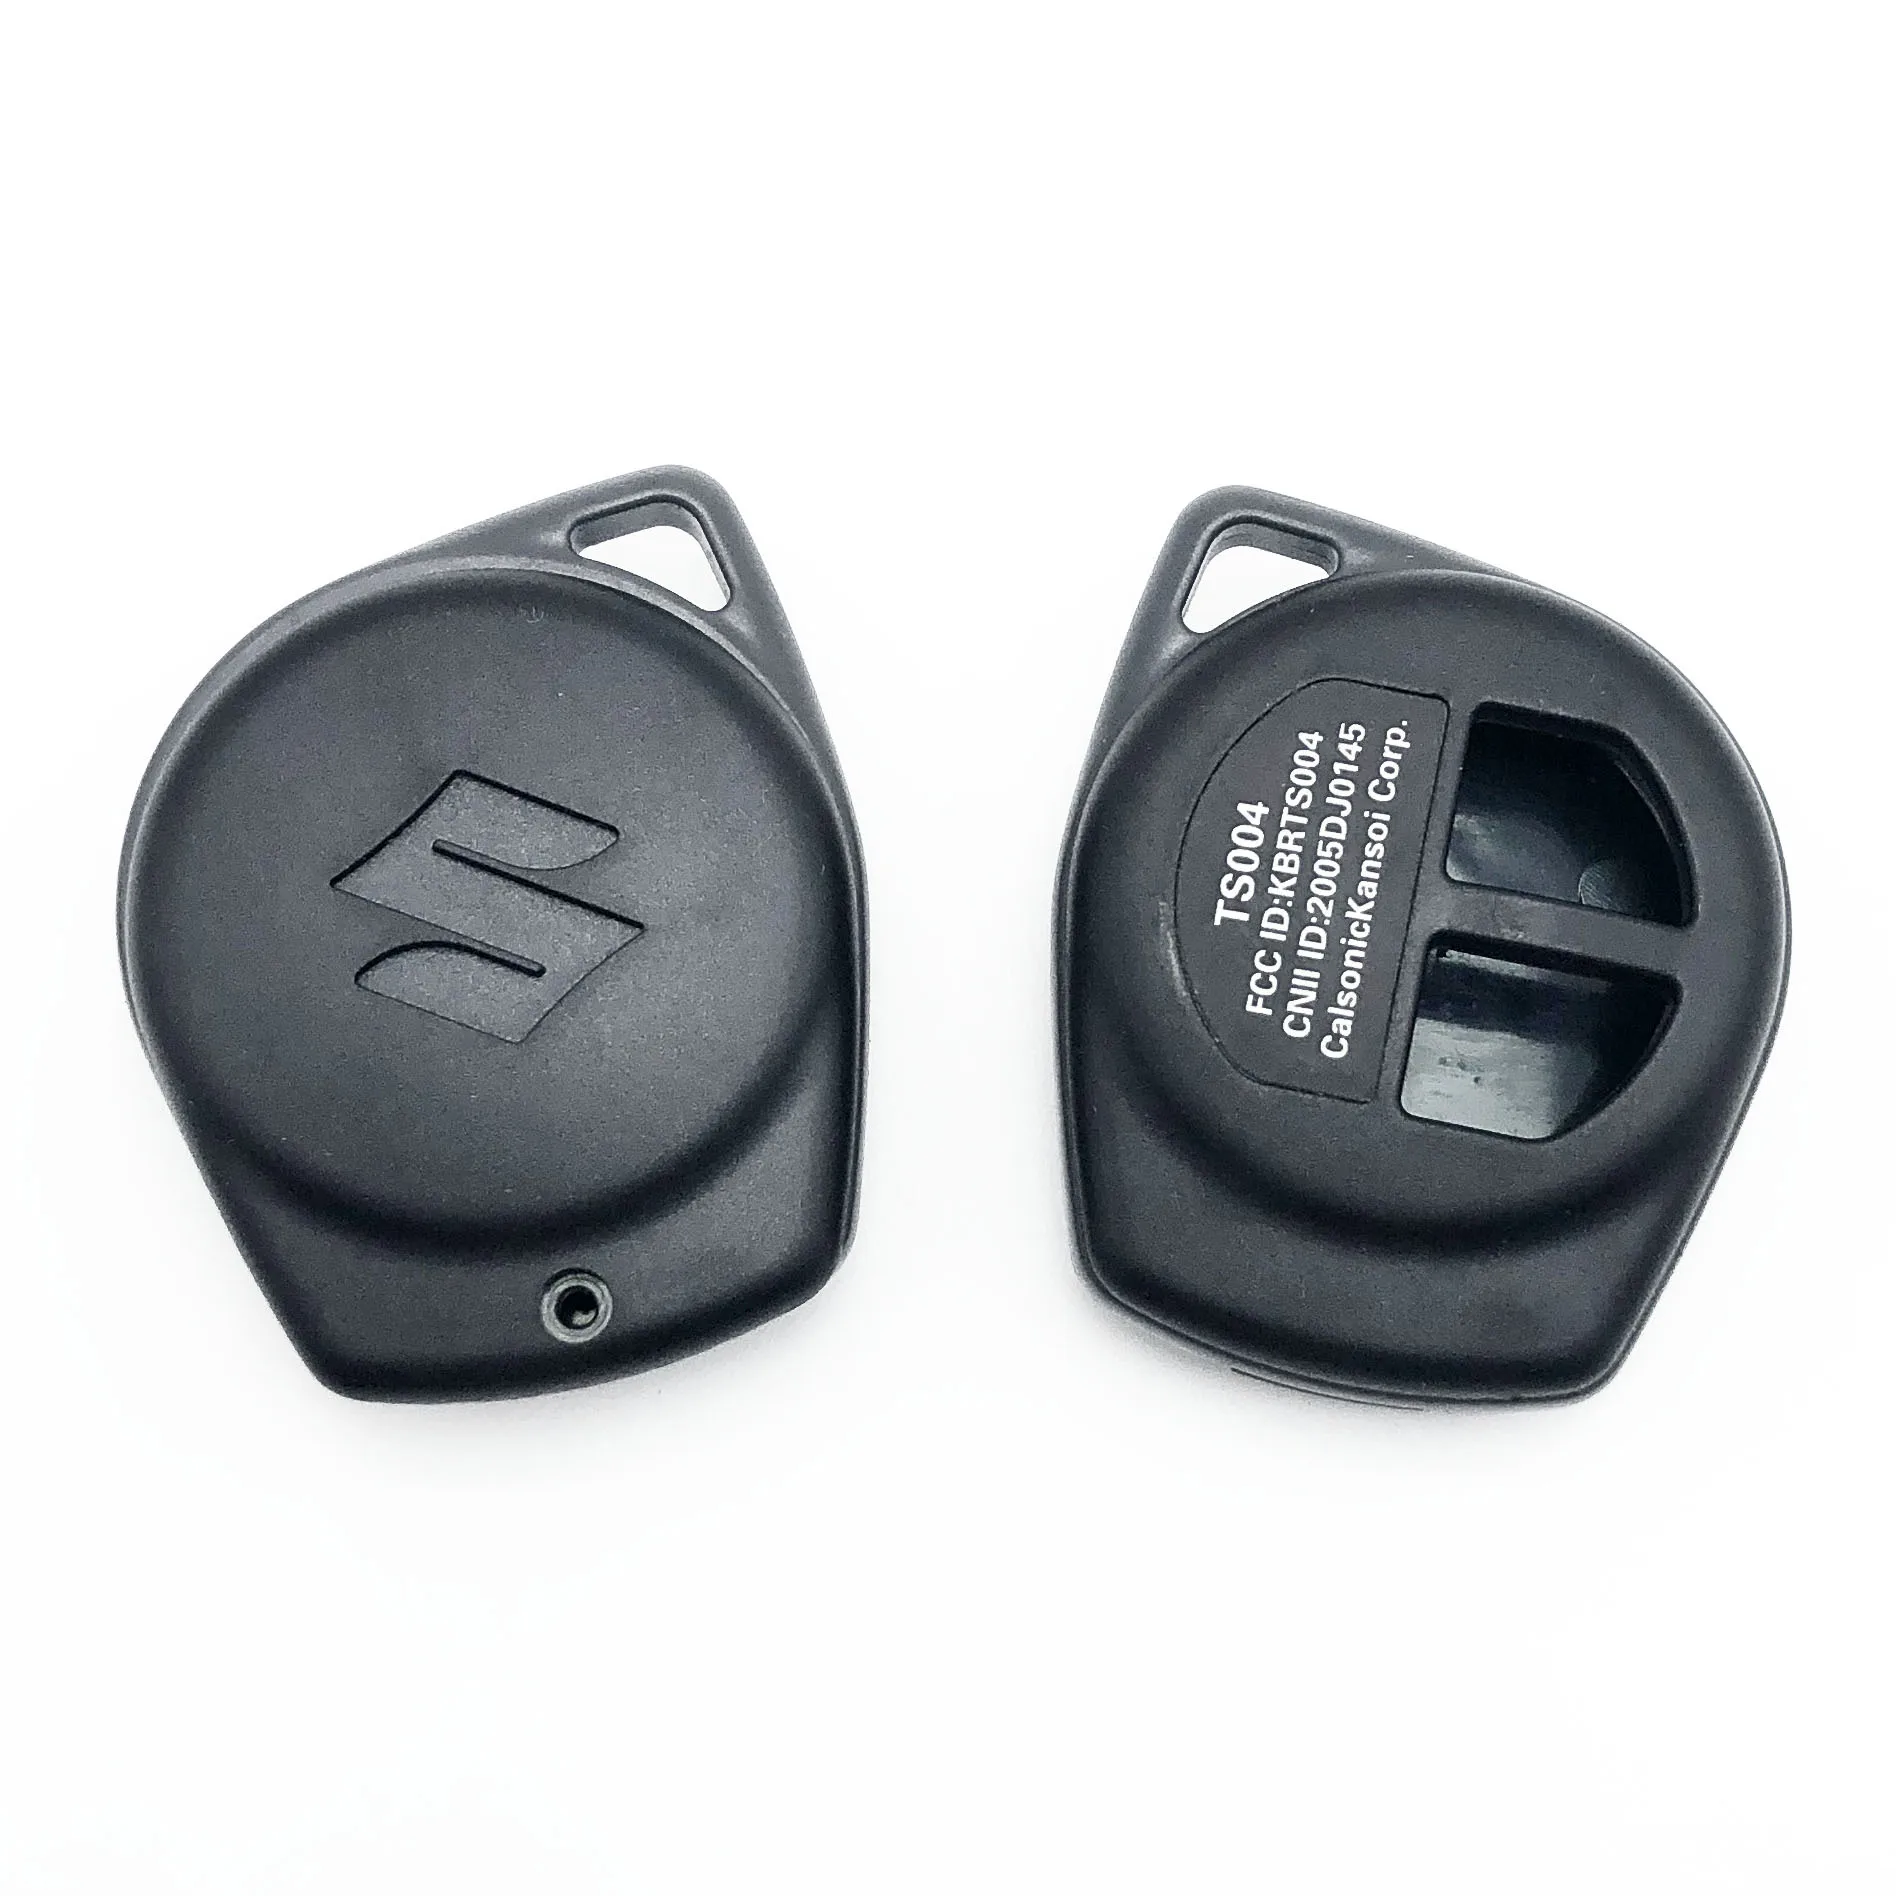 

50pcs For Suzuki key cover Swift Grand SX4 Liana Aerio Vitara GRAND VITARA ALTO Jimny Key 2 Buttons Fob Case Without Blade cross